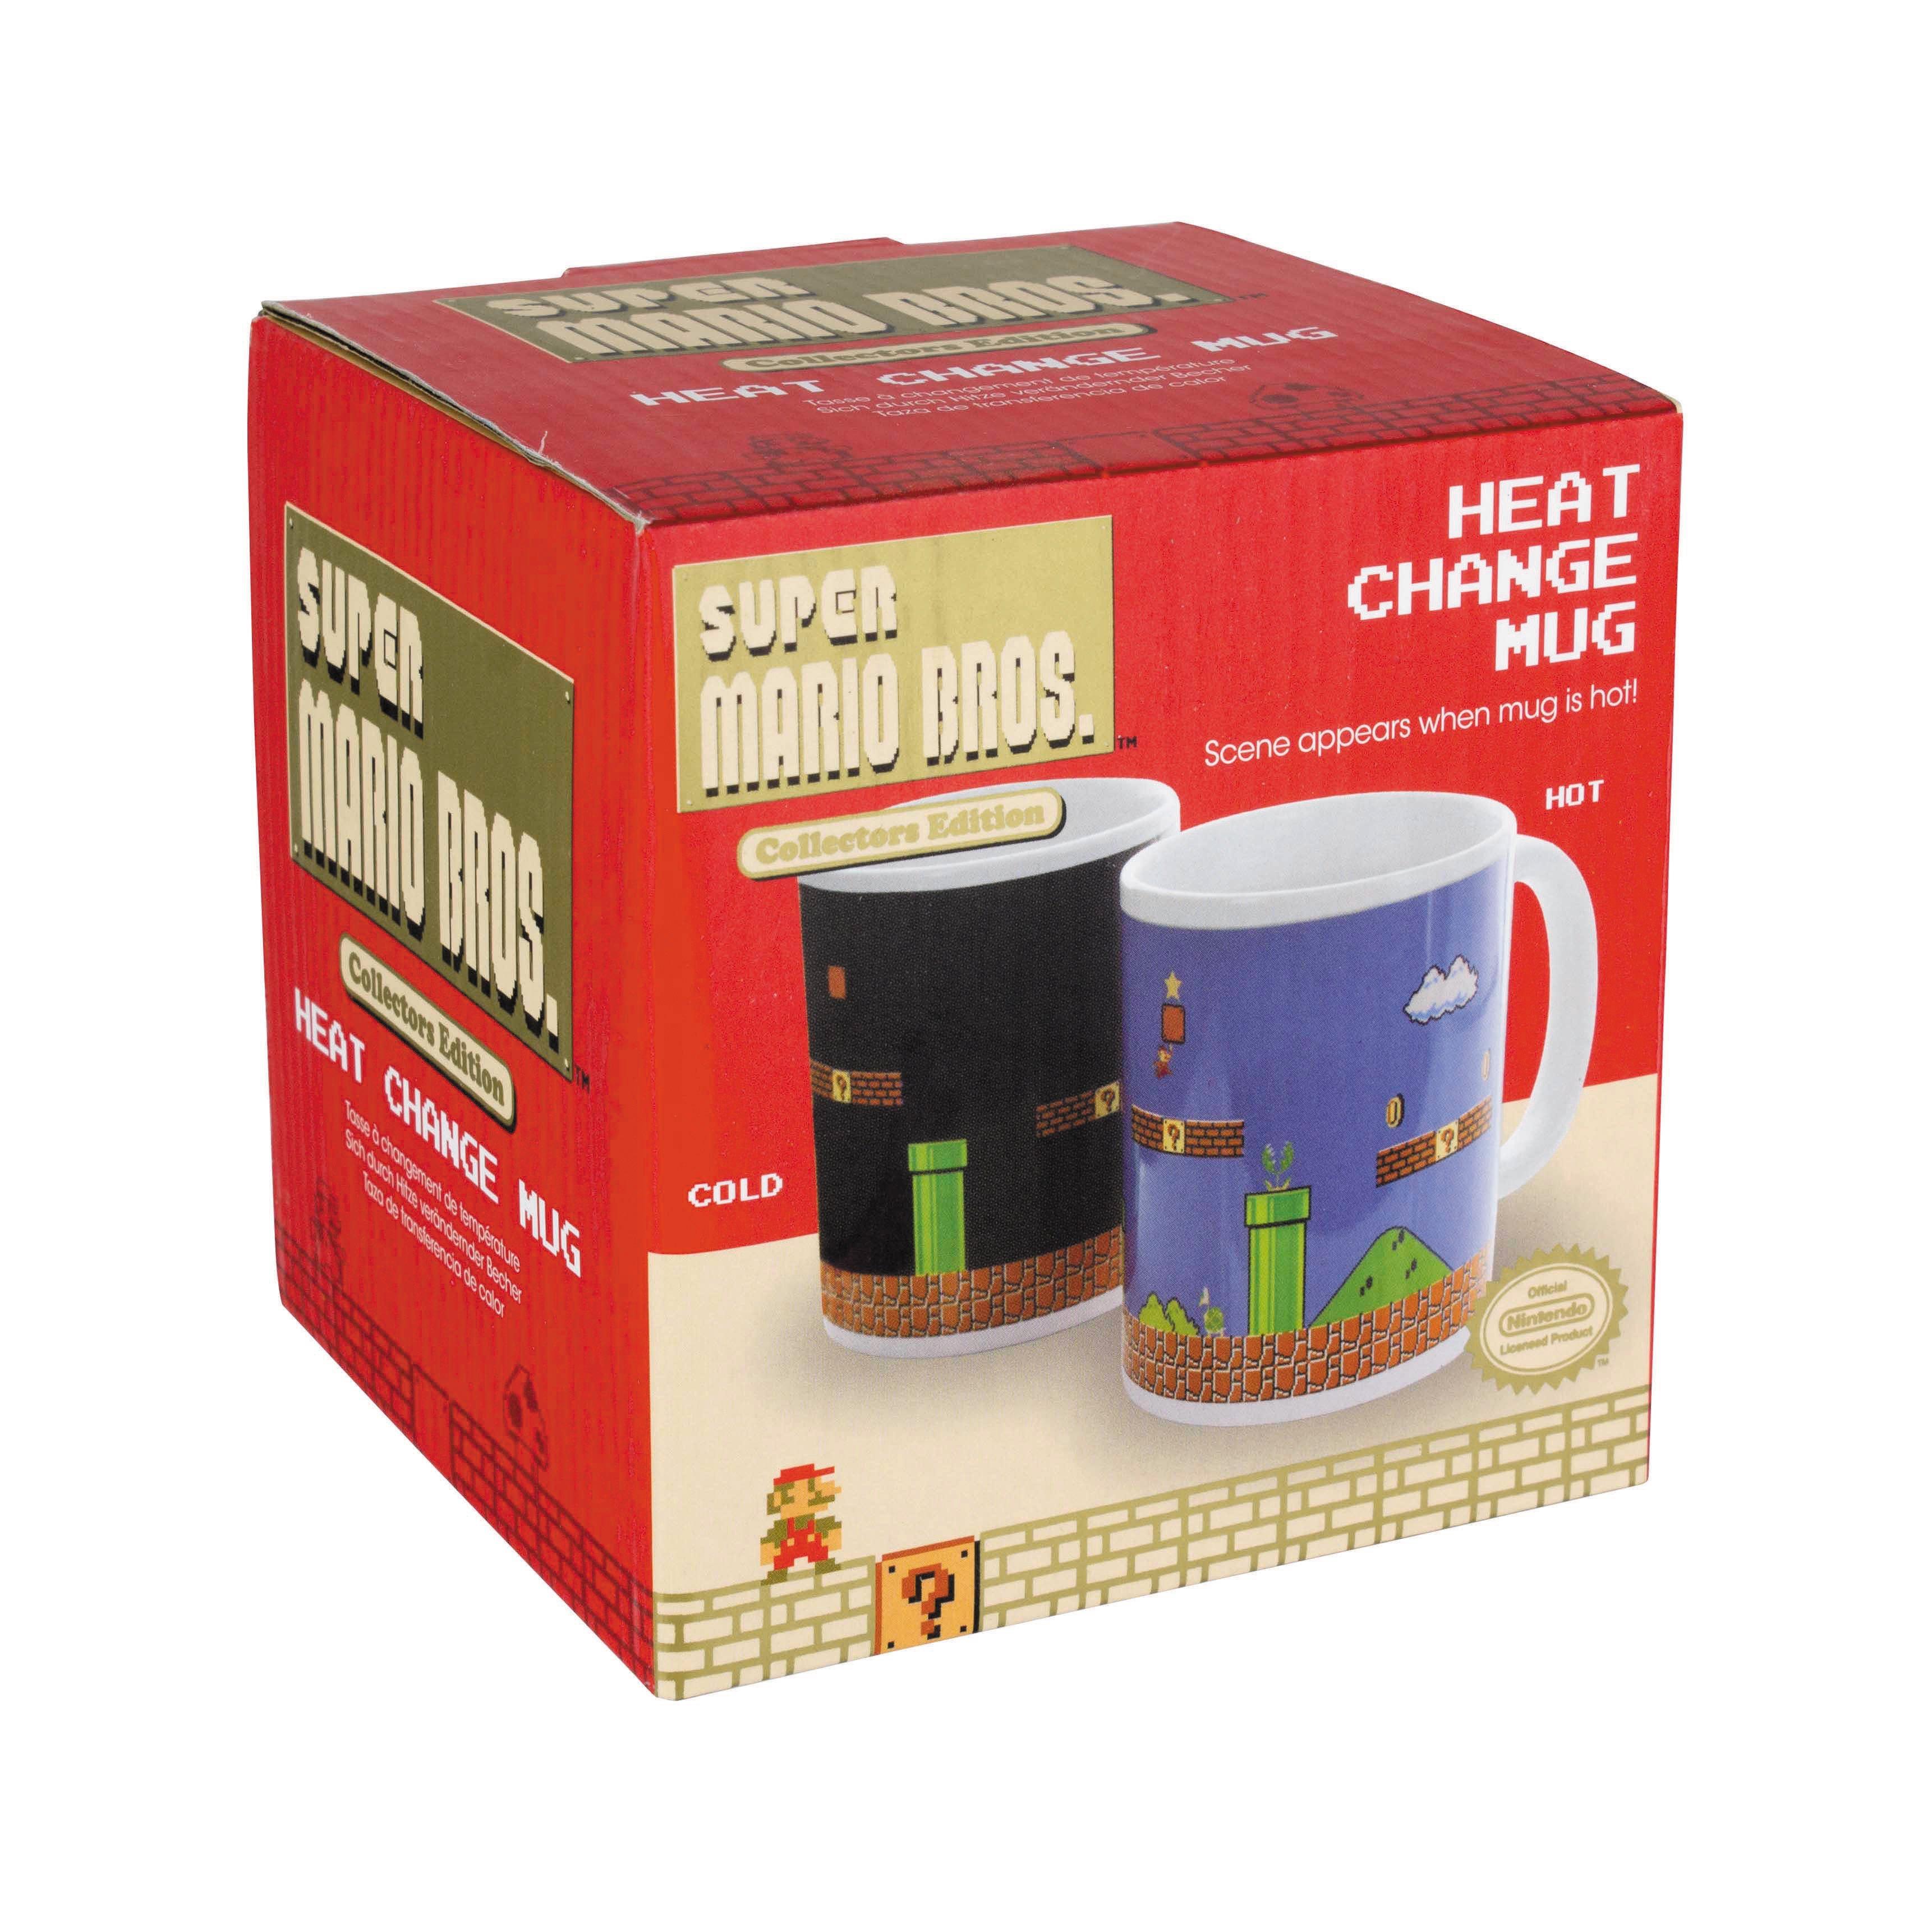 xbox heat change mug